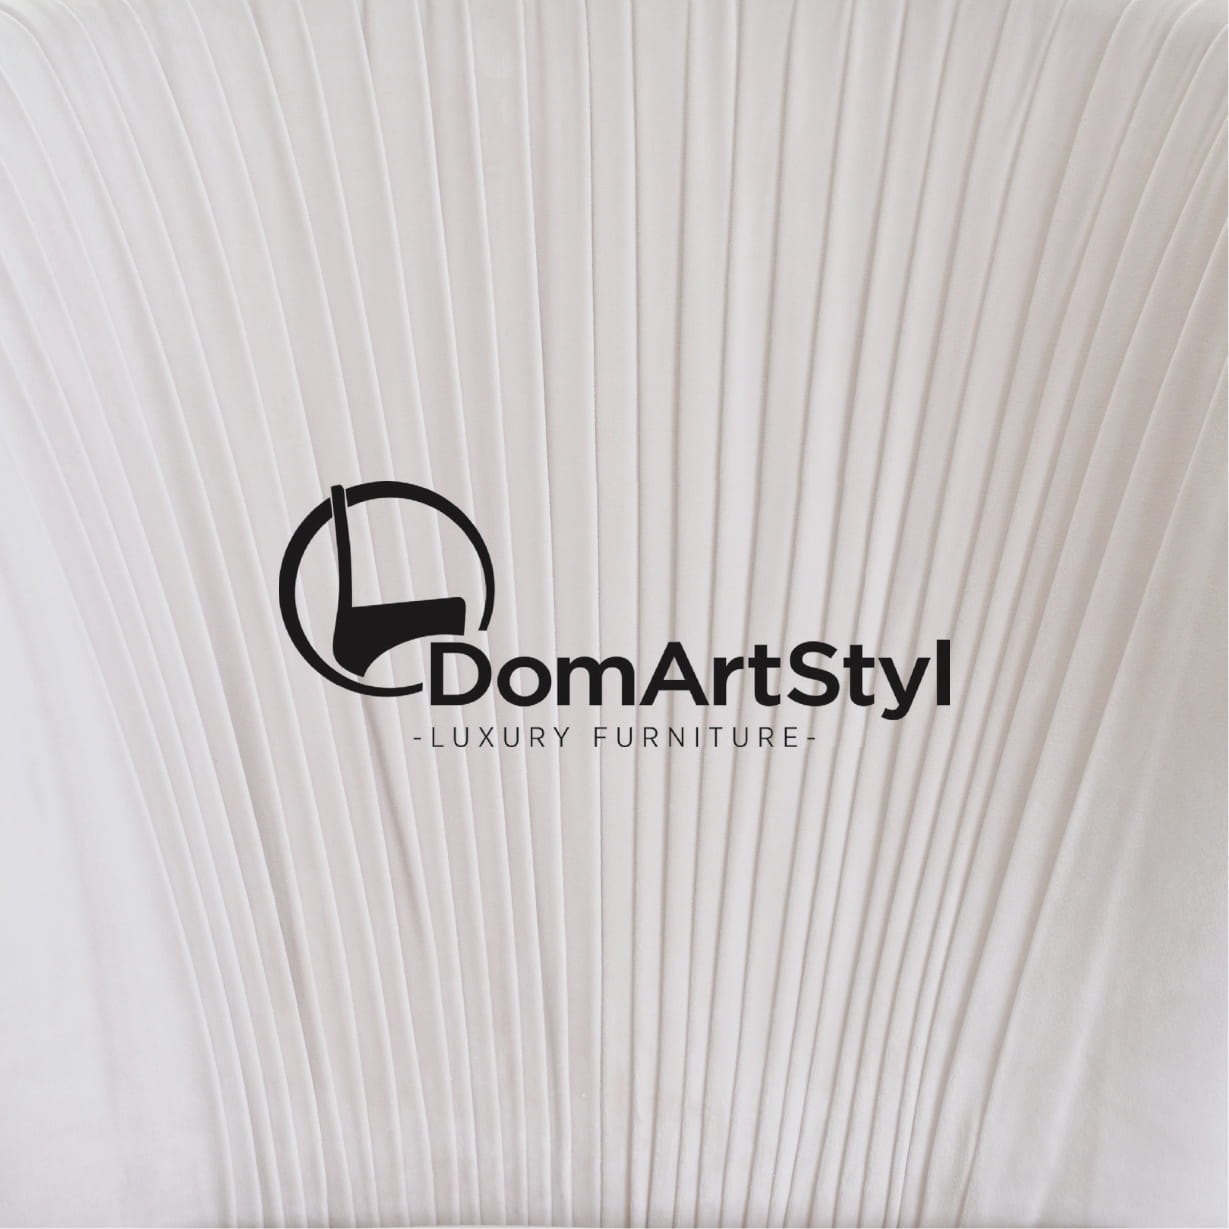 Katalog DomArtStyl 2022 - Strona 1